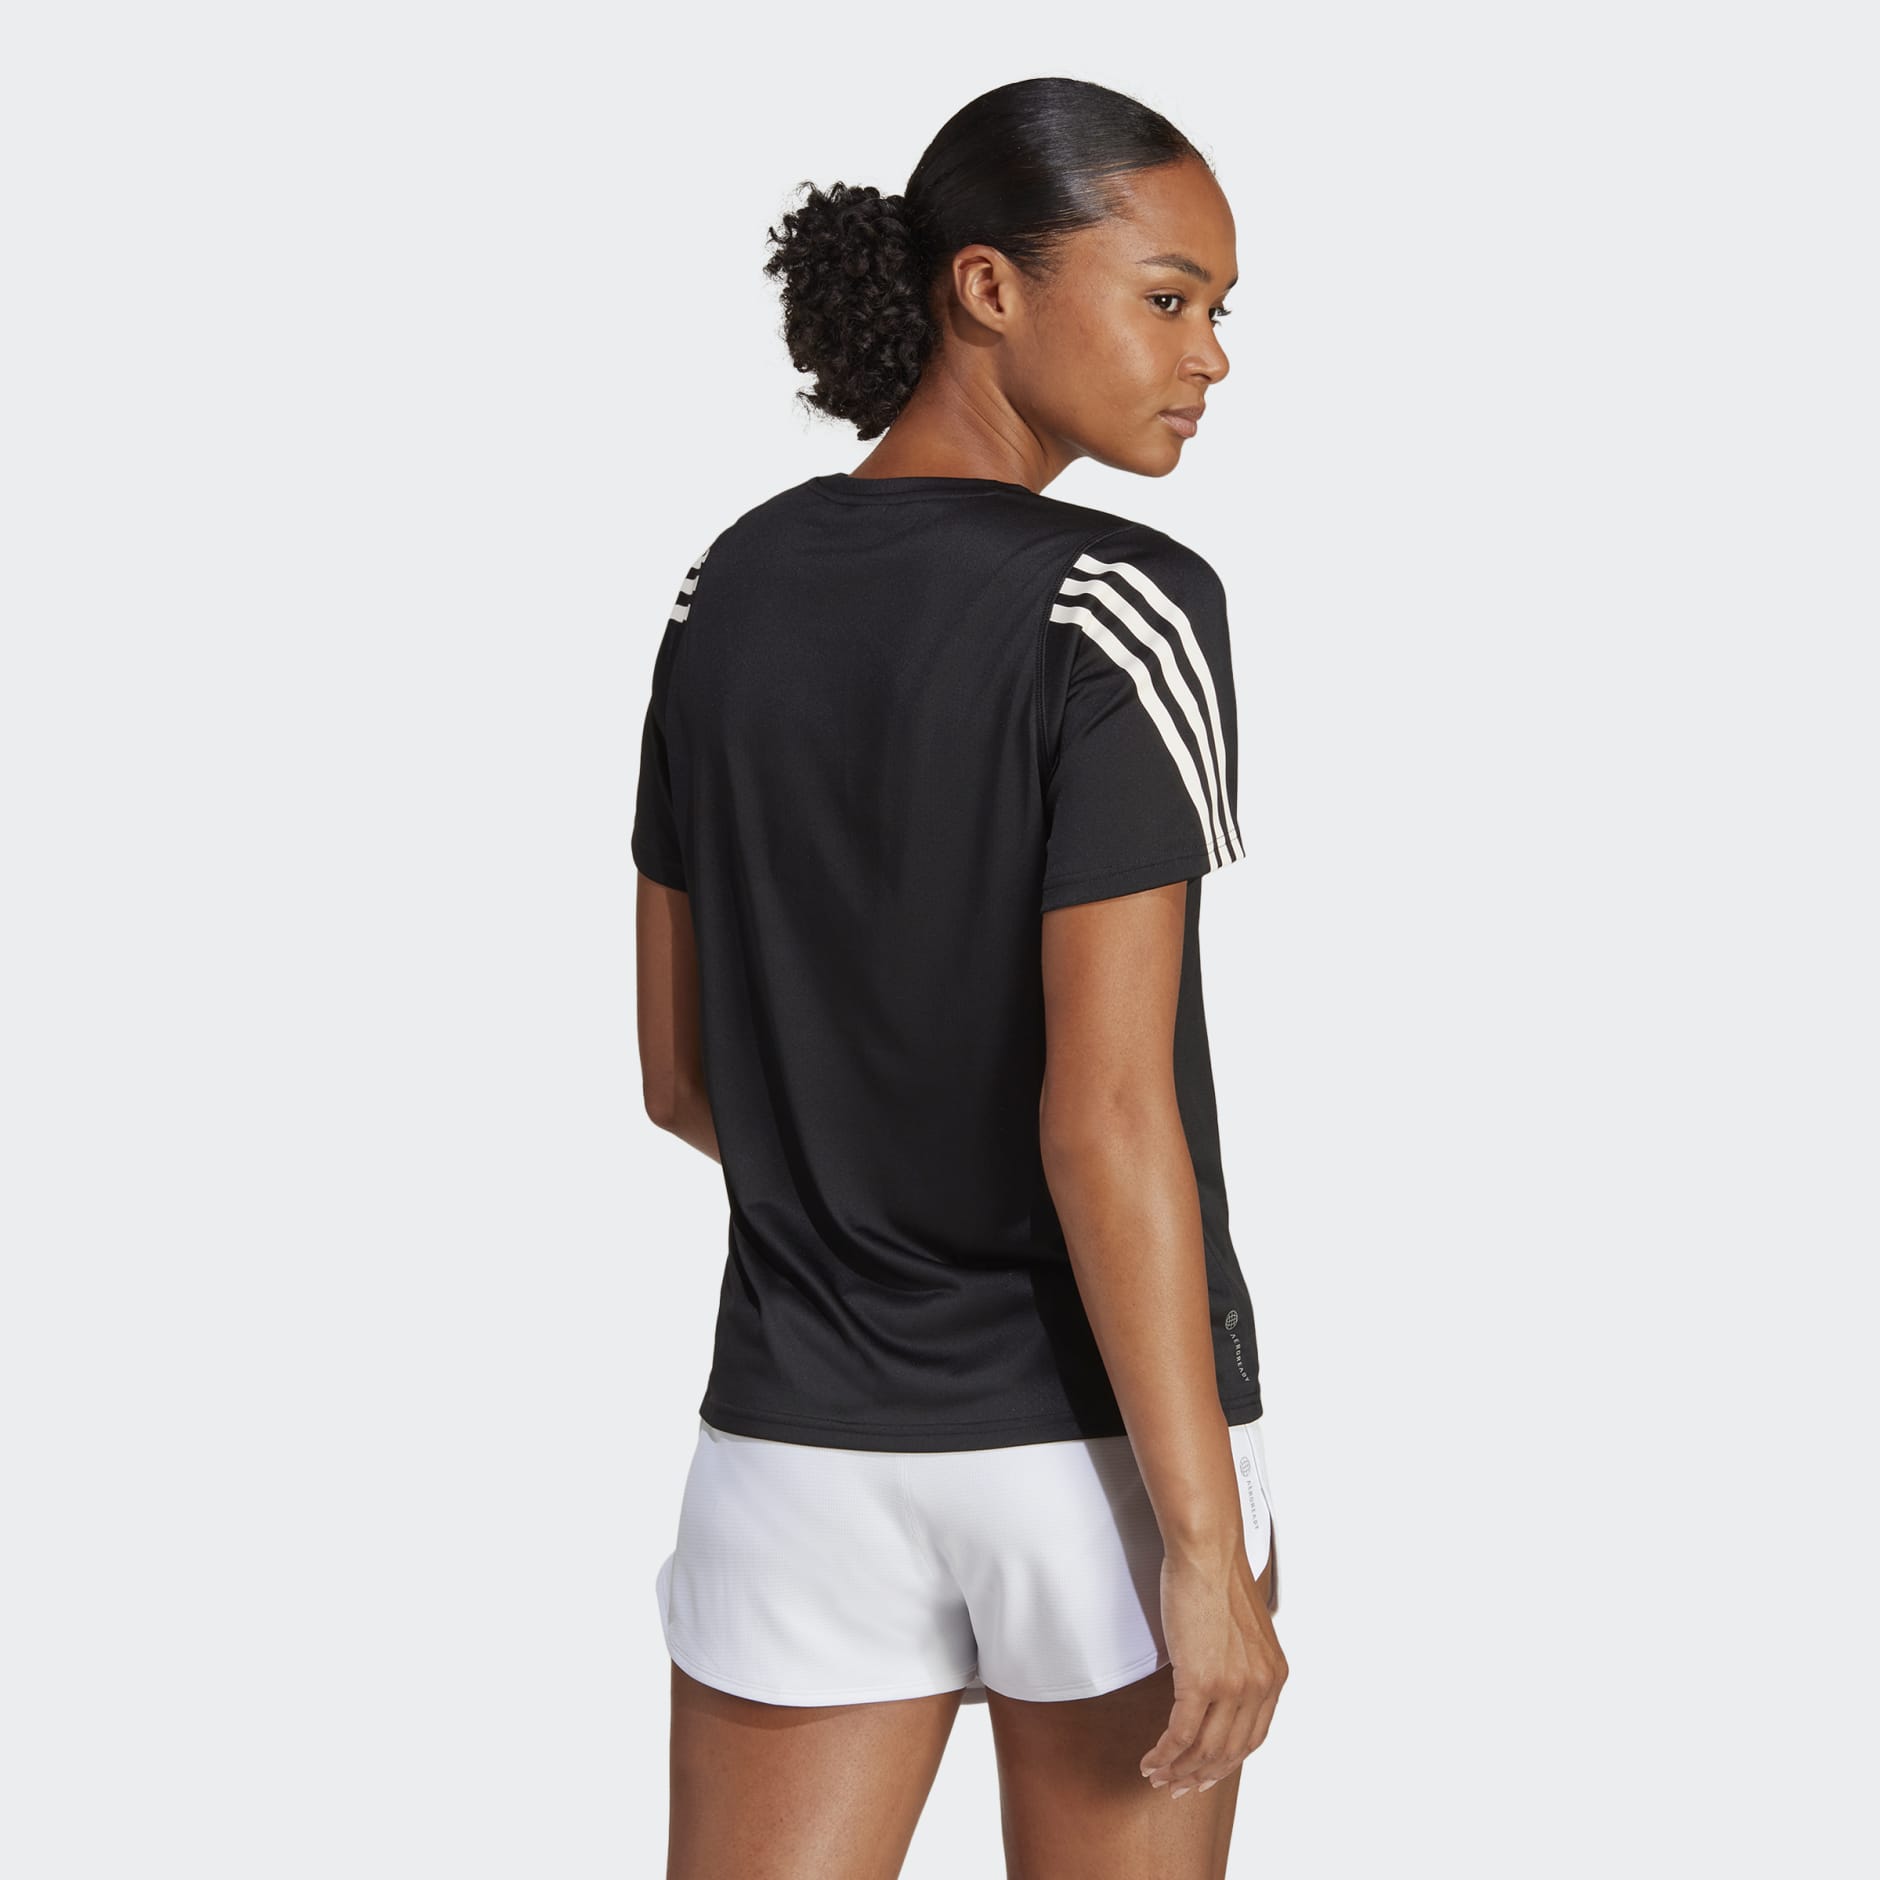 Women's Clothing - Run Icons 3-Stripes Low-Carbon Running Tee - Black ...